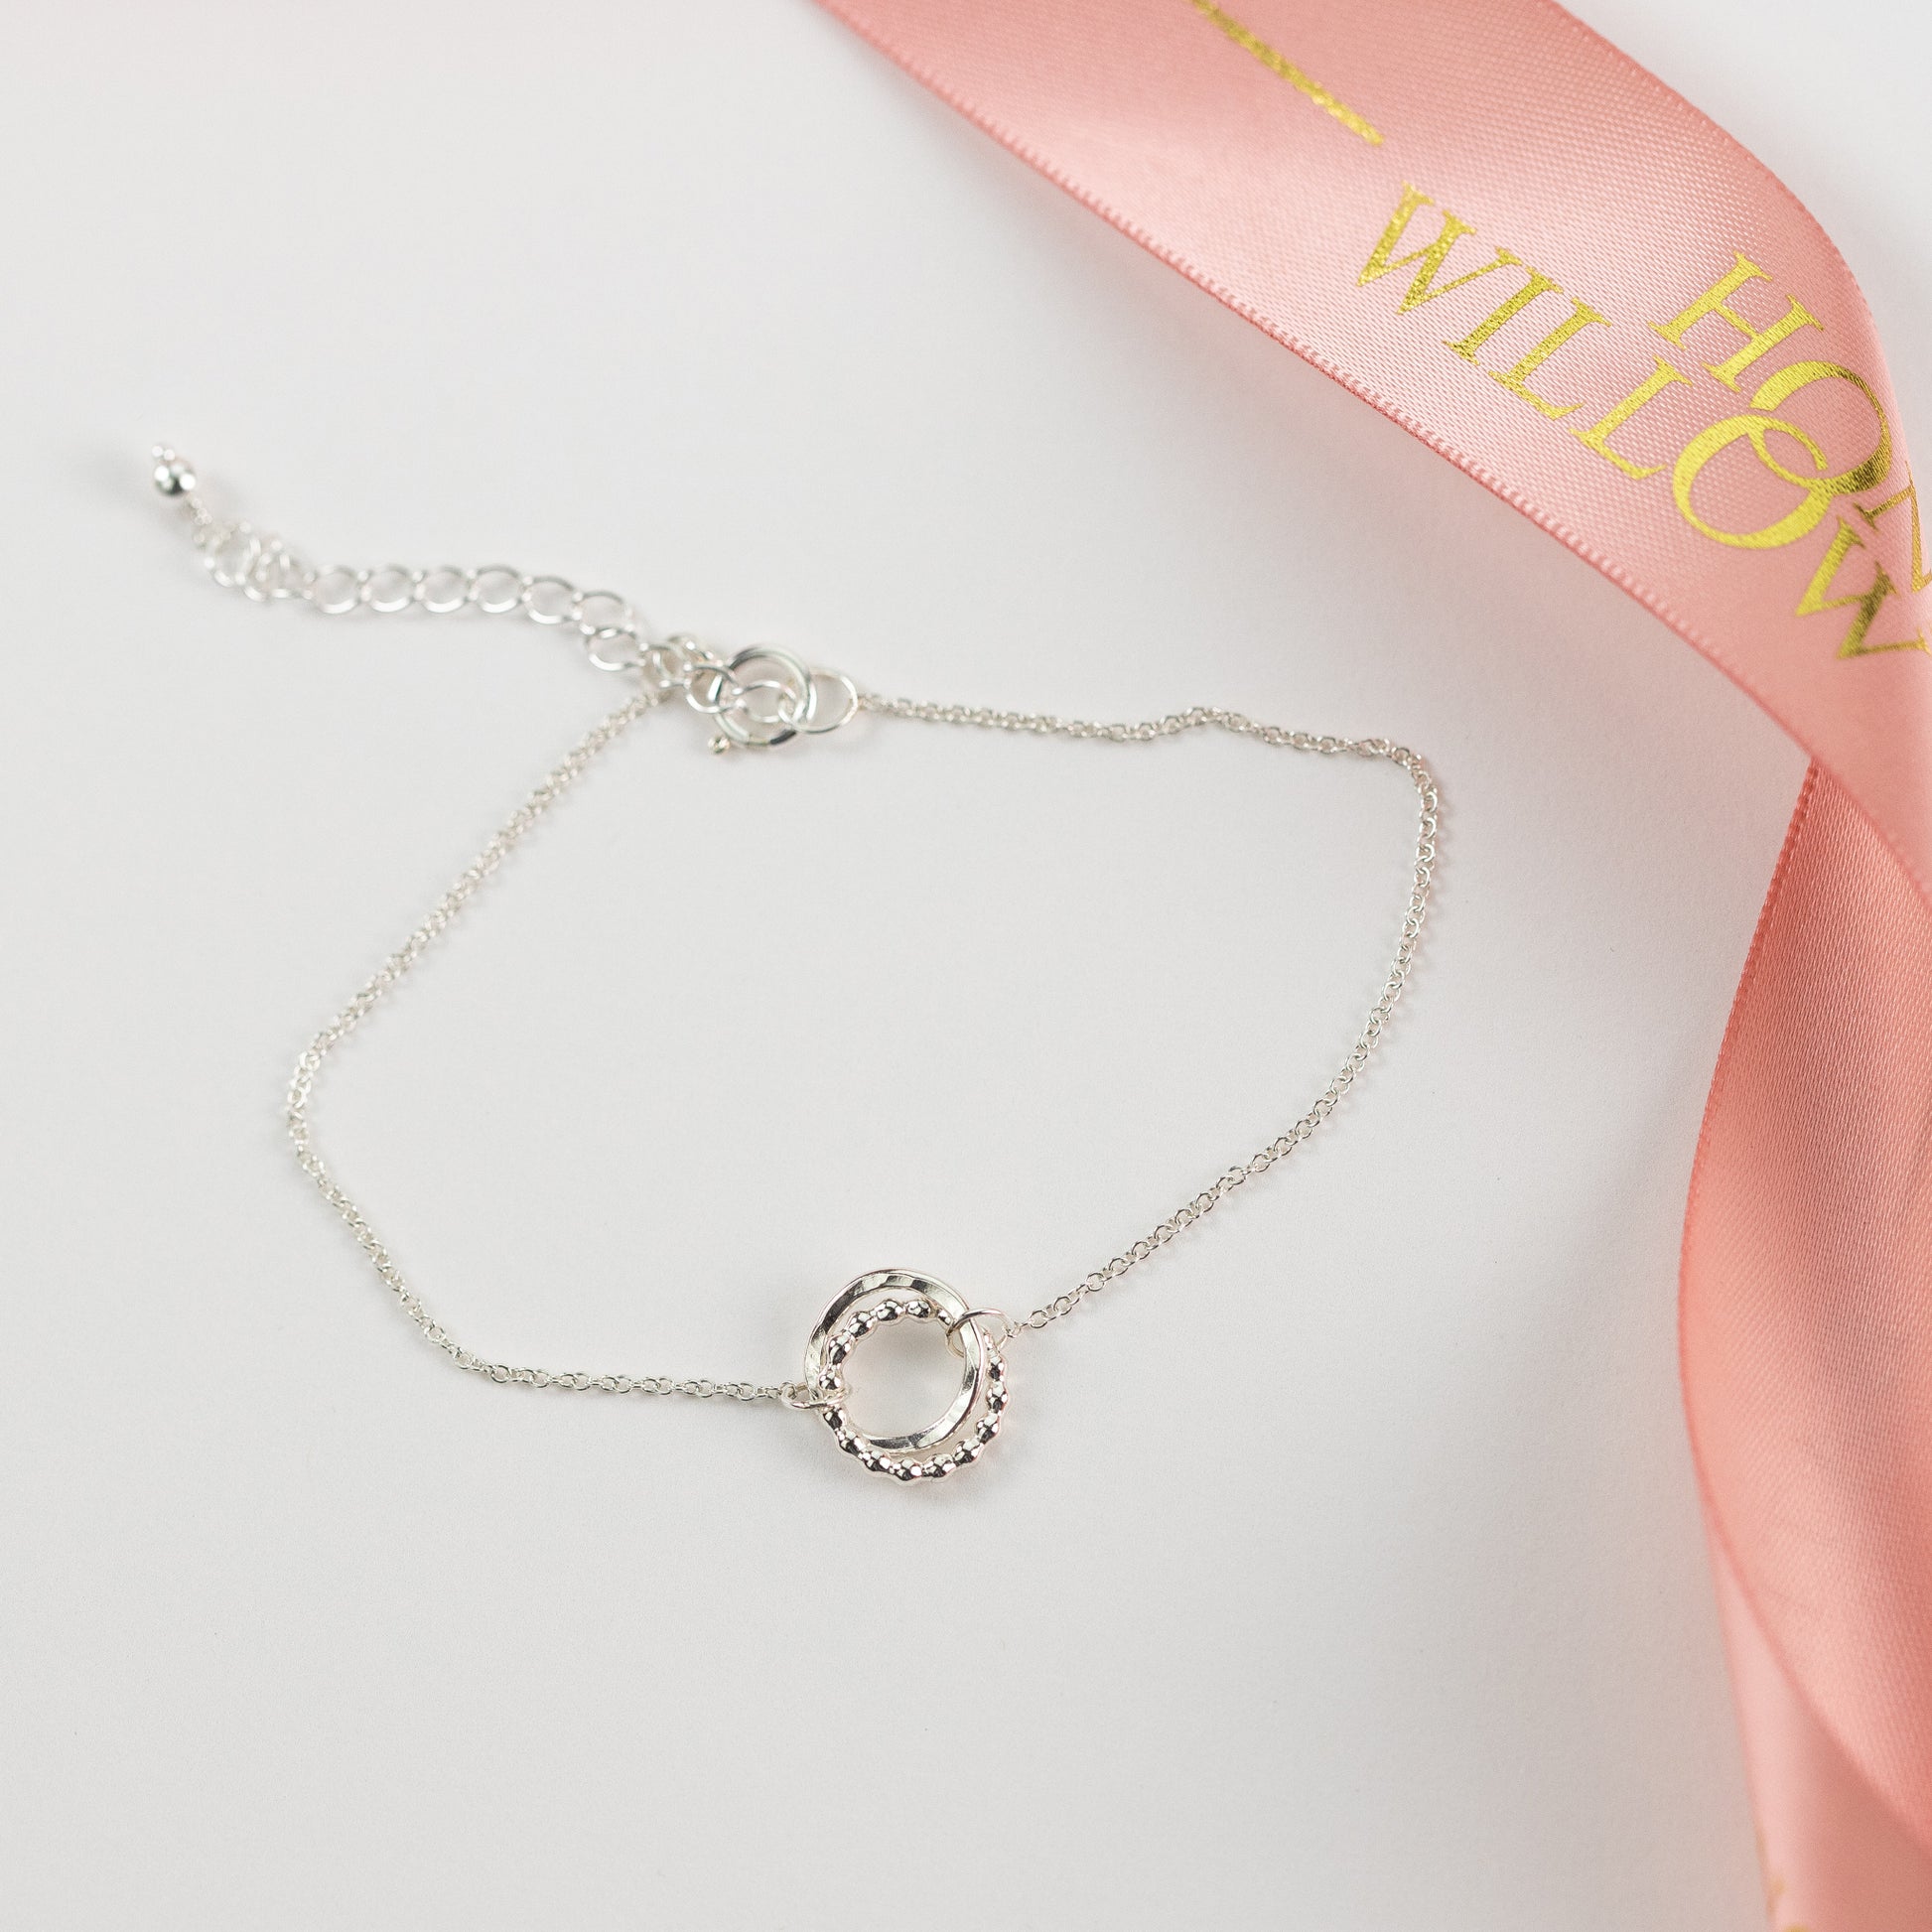 Gift for Sister - Love Knot Bracelet - Linked for a Lifetime - Silver